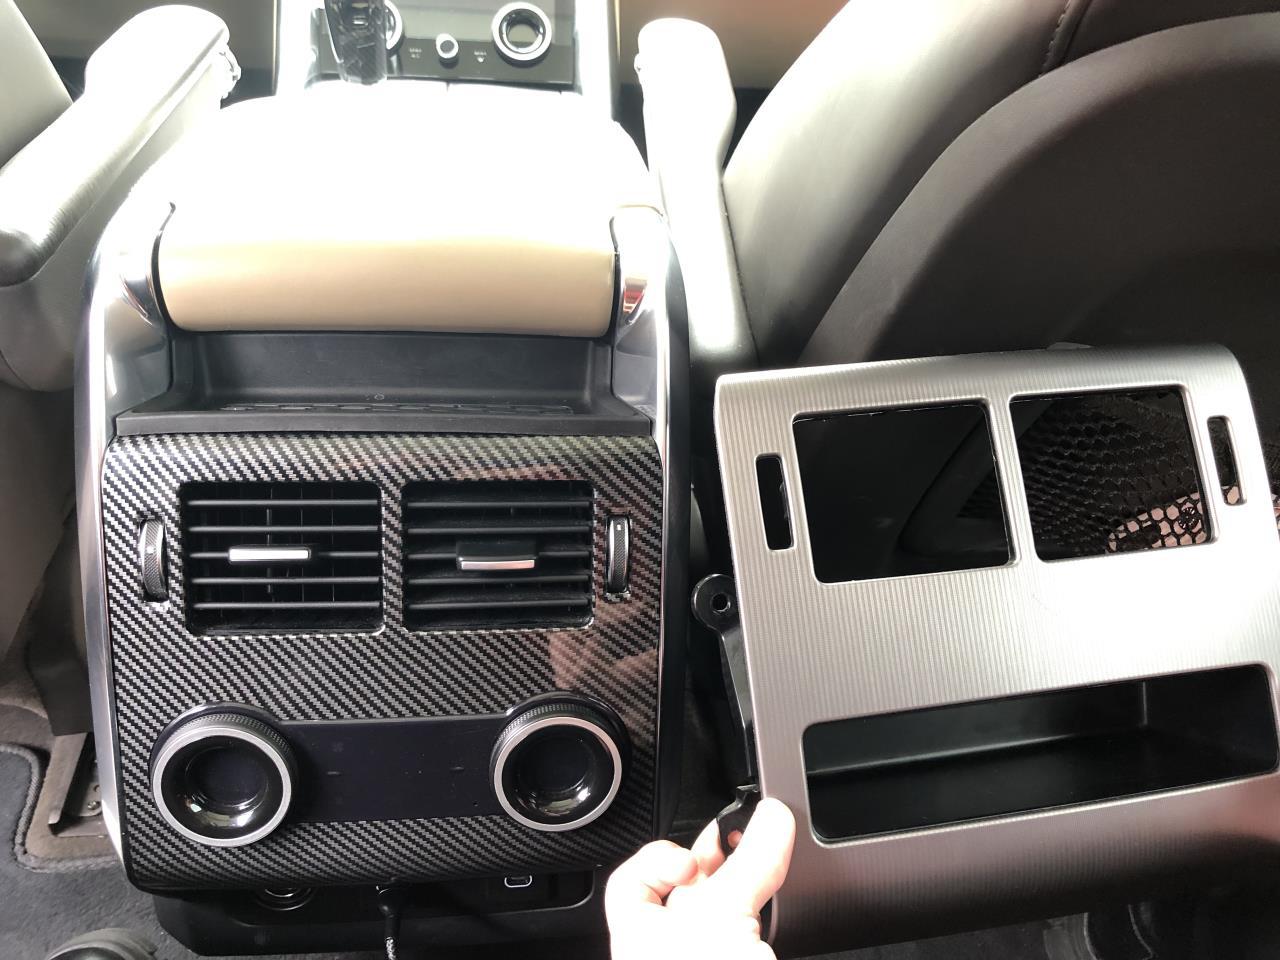 Rear Range Rover sport AC screen 2014 upgrade to 2018 version